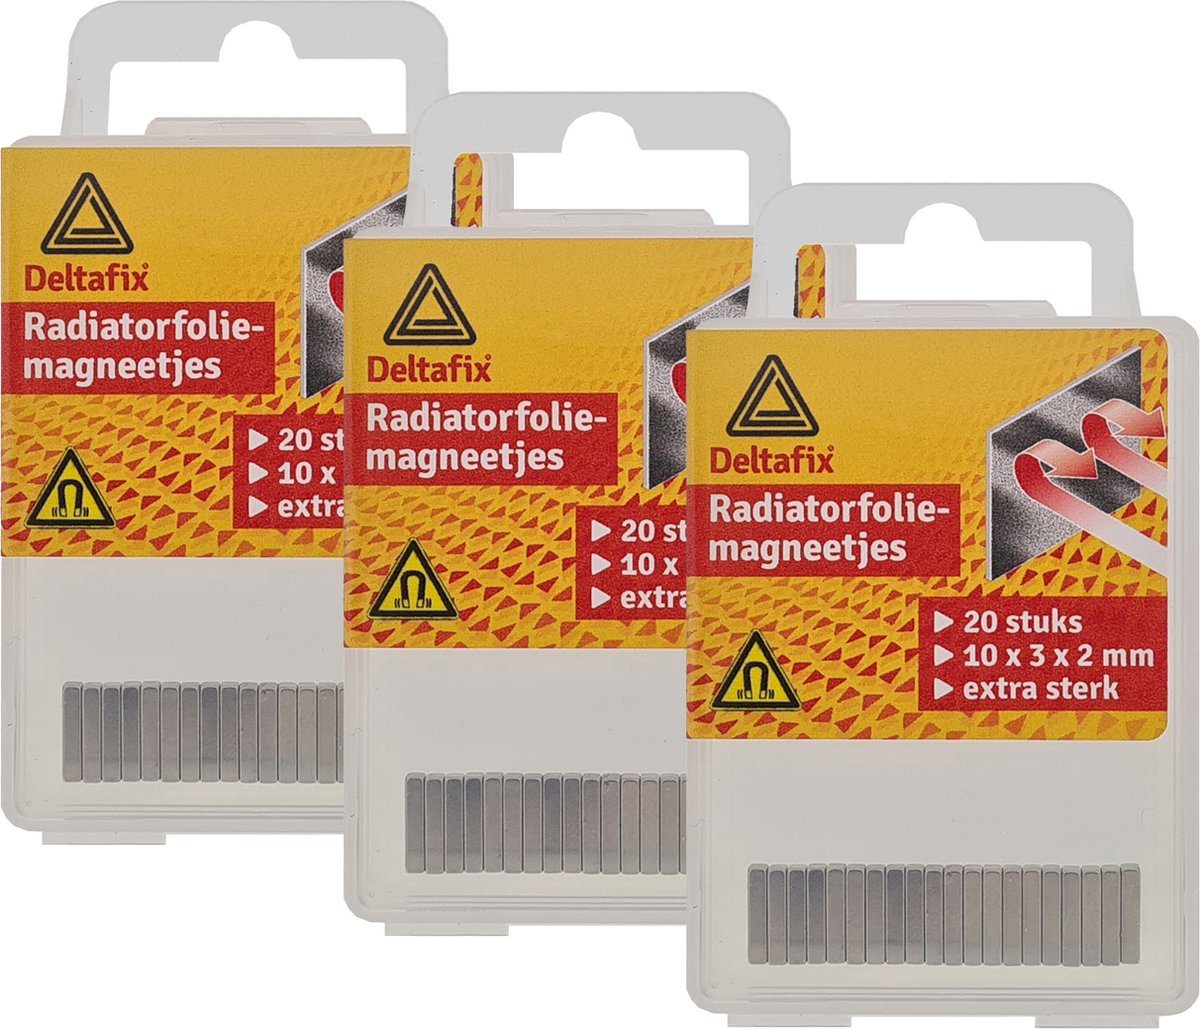 Deltafix Radiatorfolie magneten 60x - nikkel - hittebestendig - 10 x 3 x 2 mm